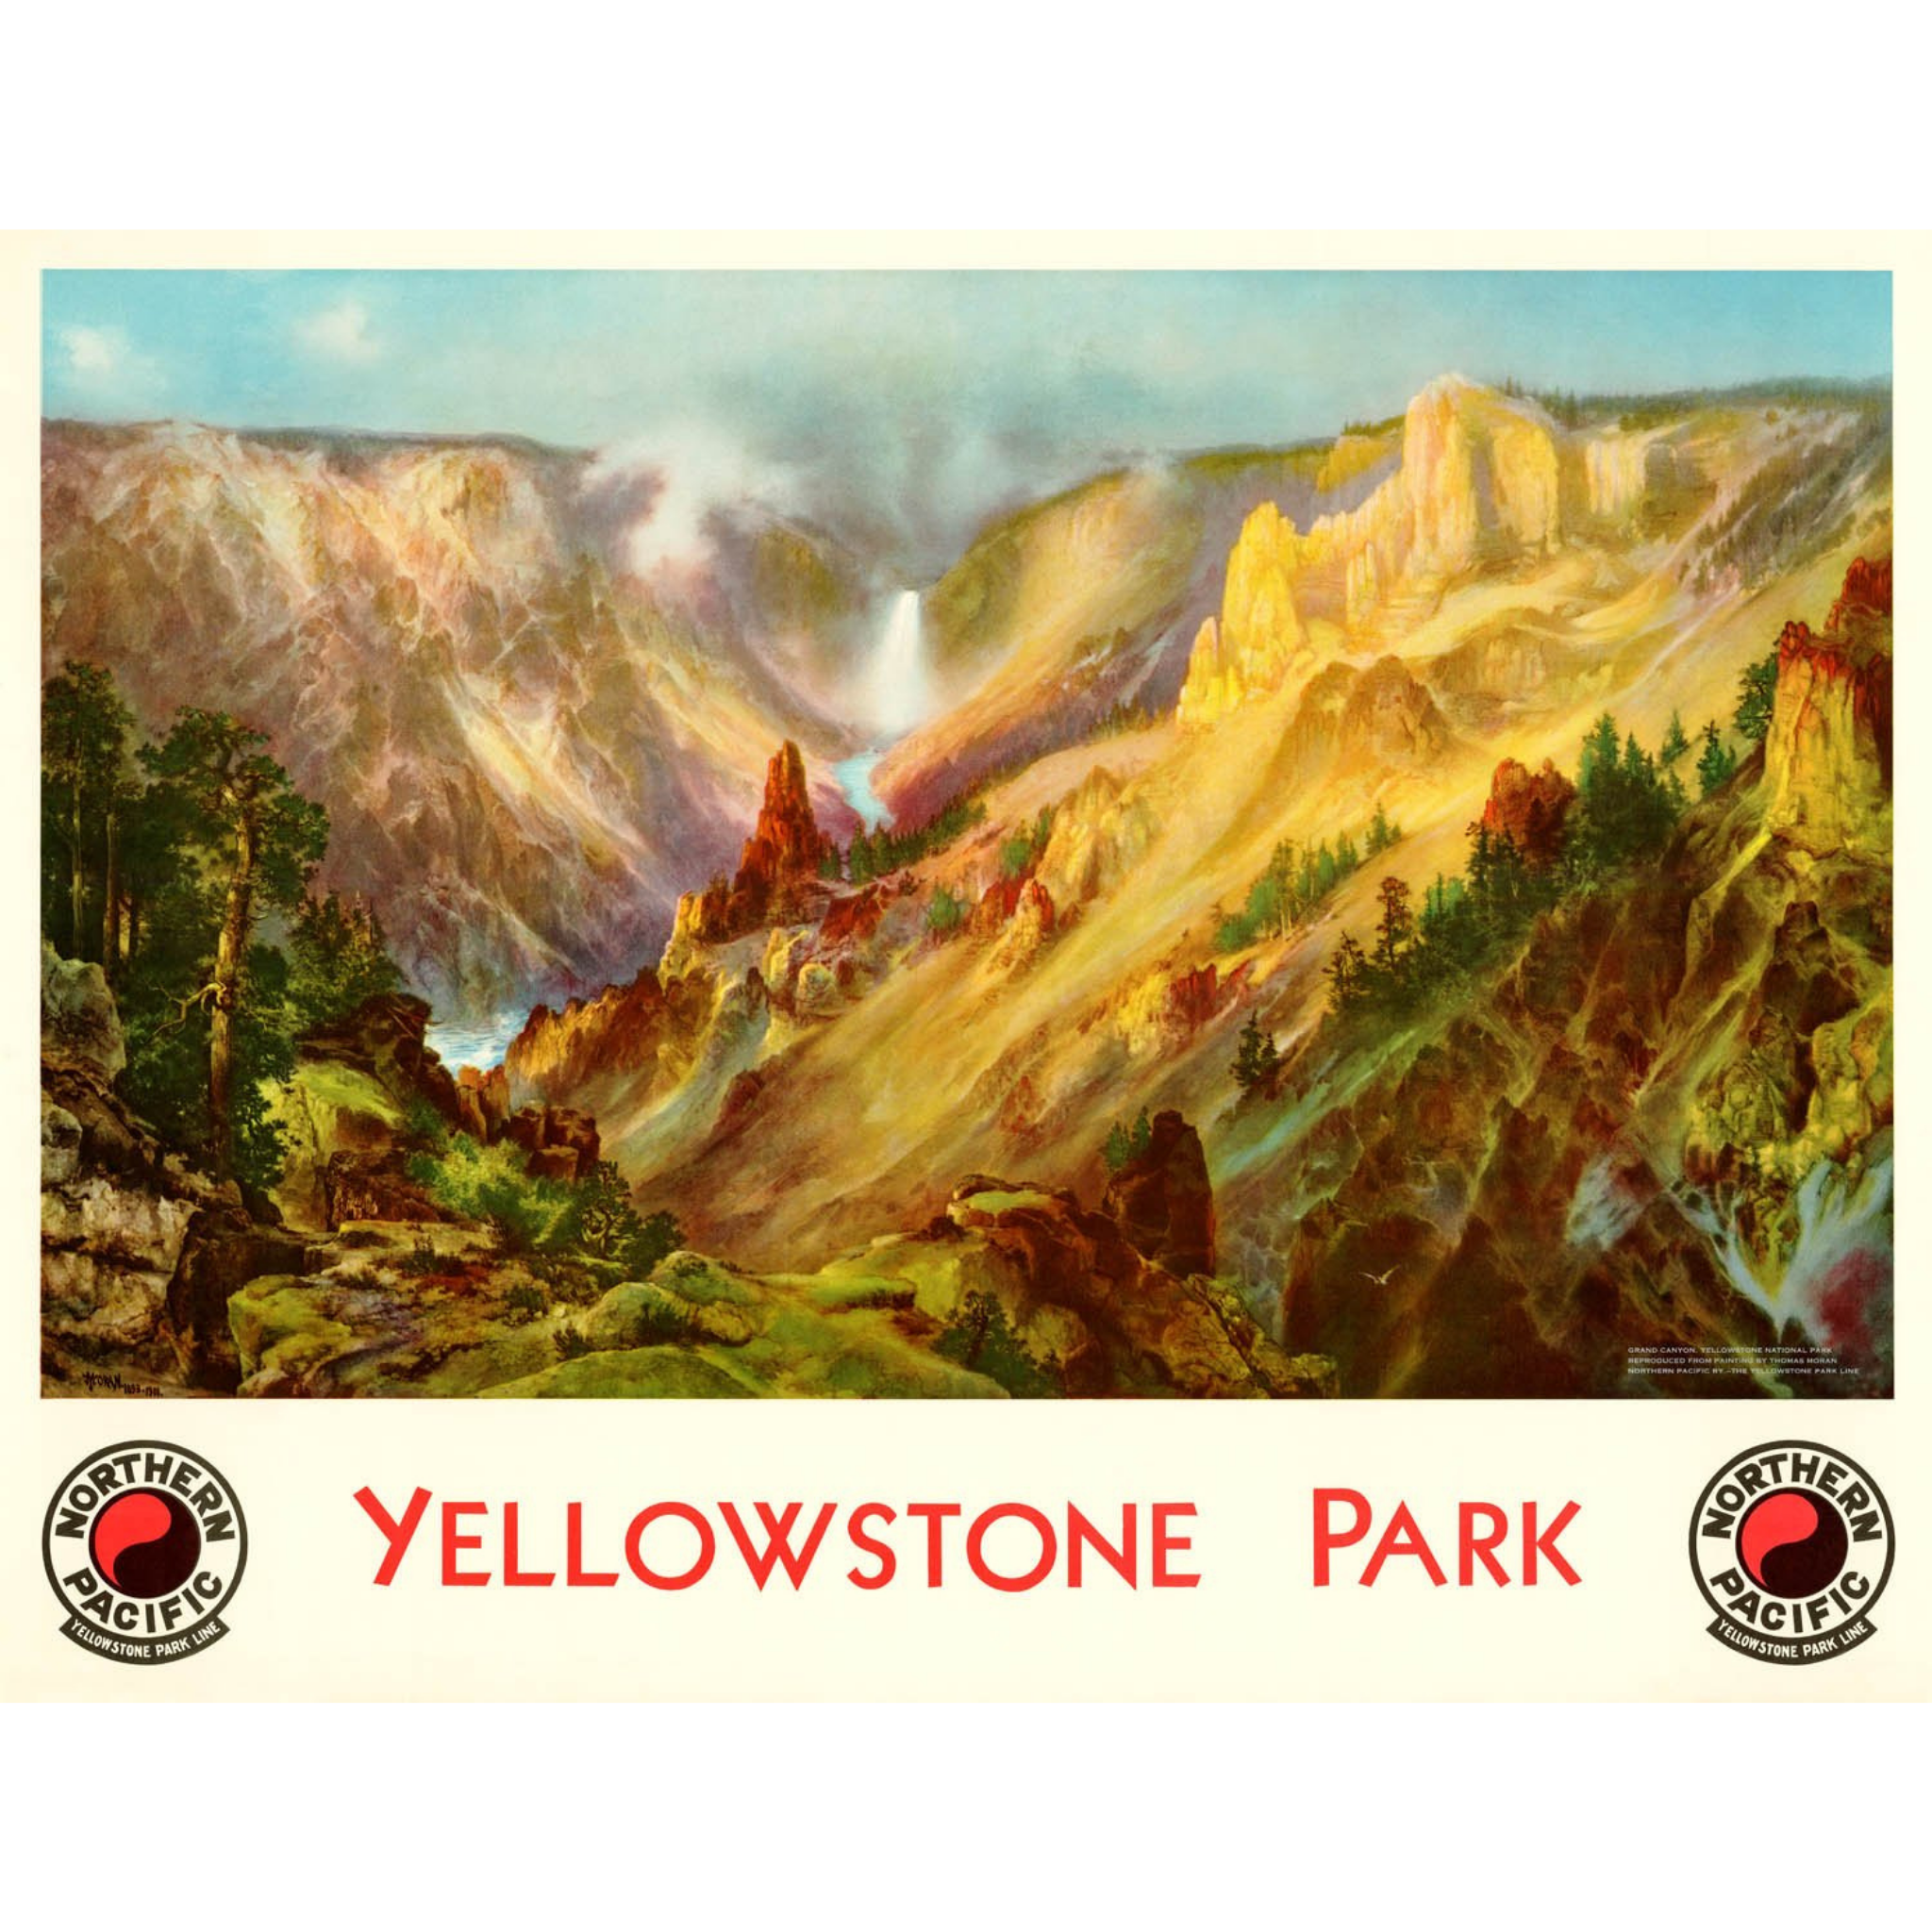 The Grand Canyon of the Yellowstone (NPRR) - Thomas Moran Lithograph